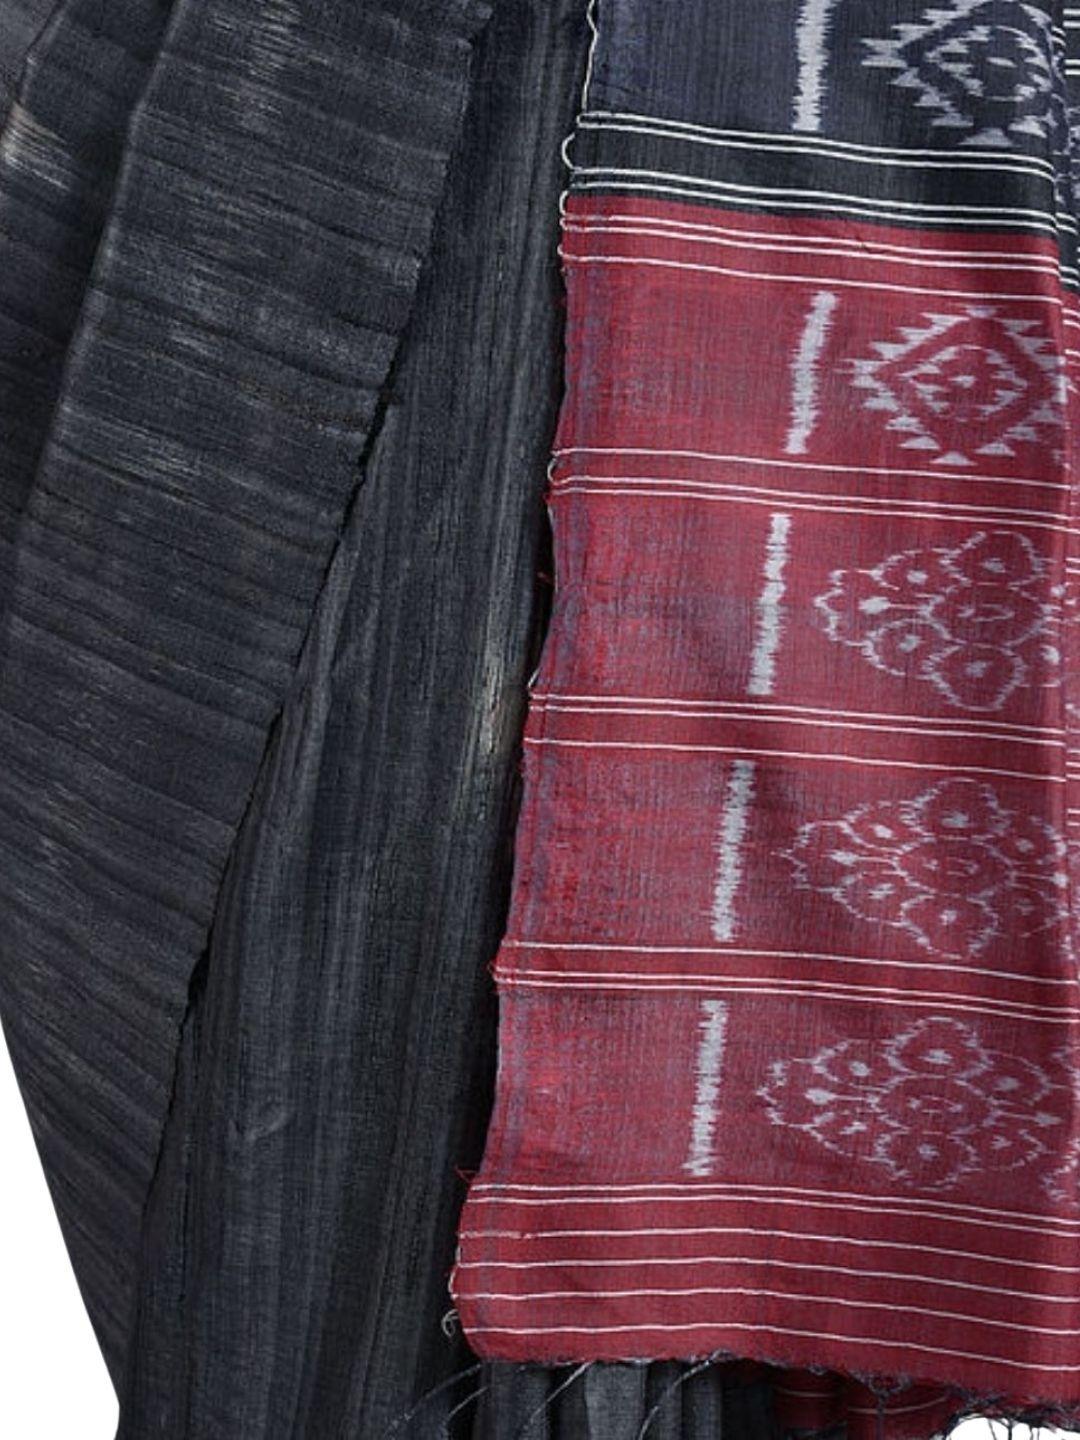 Black Tussar Ghicha Silk Sambalpuri Ikat Saree - Crafts Collection